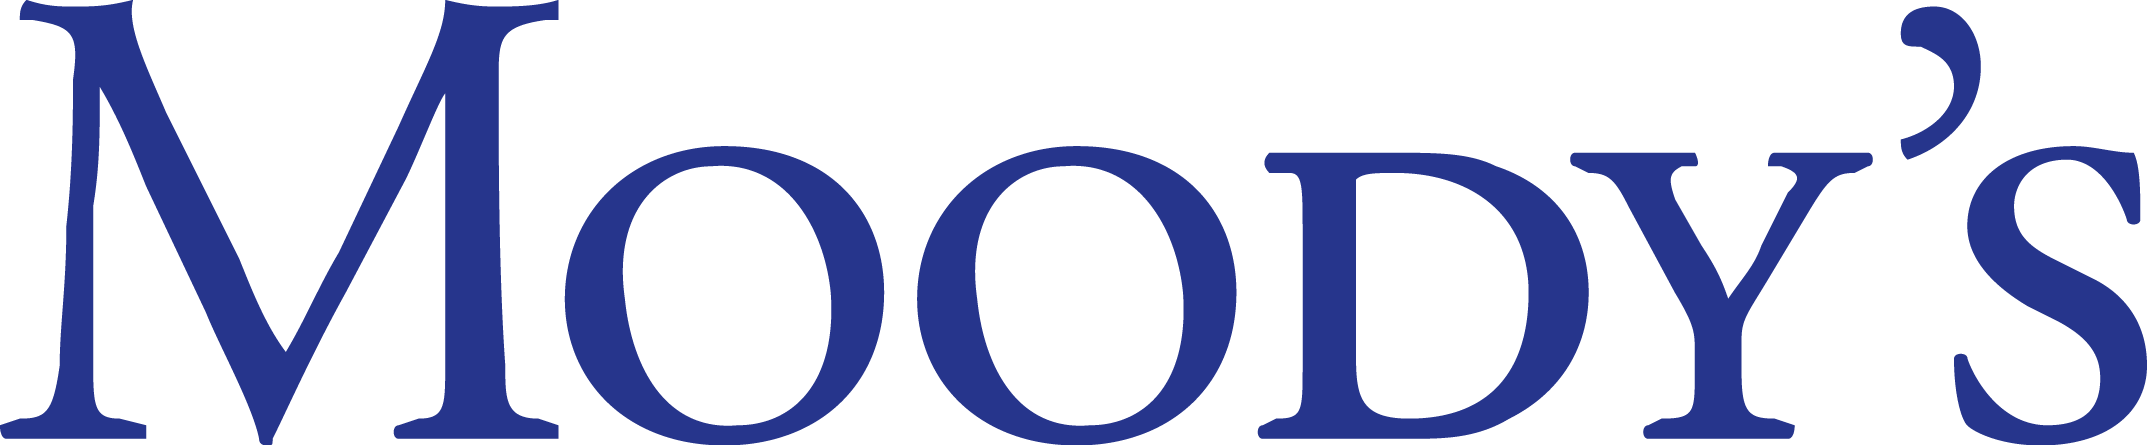 Moodys Logo [moodys.com] png